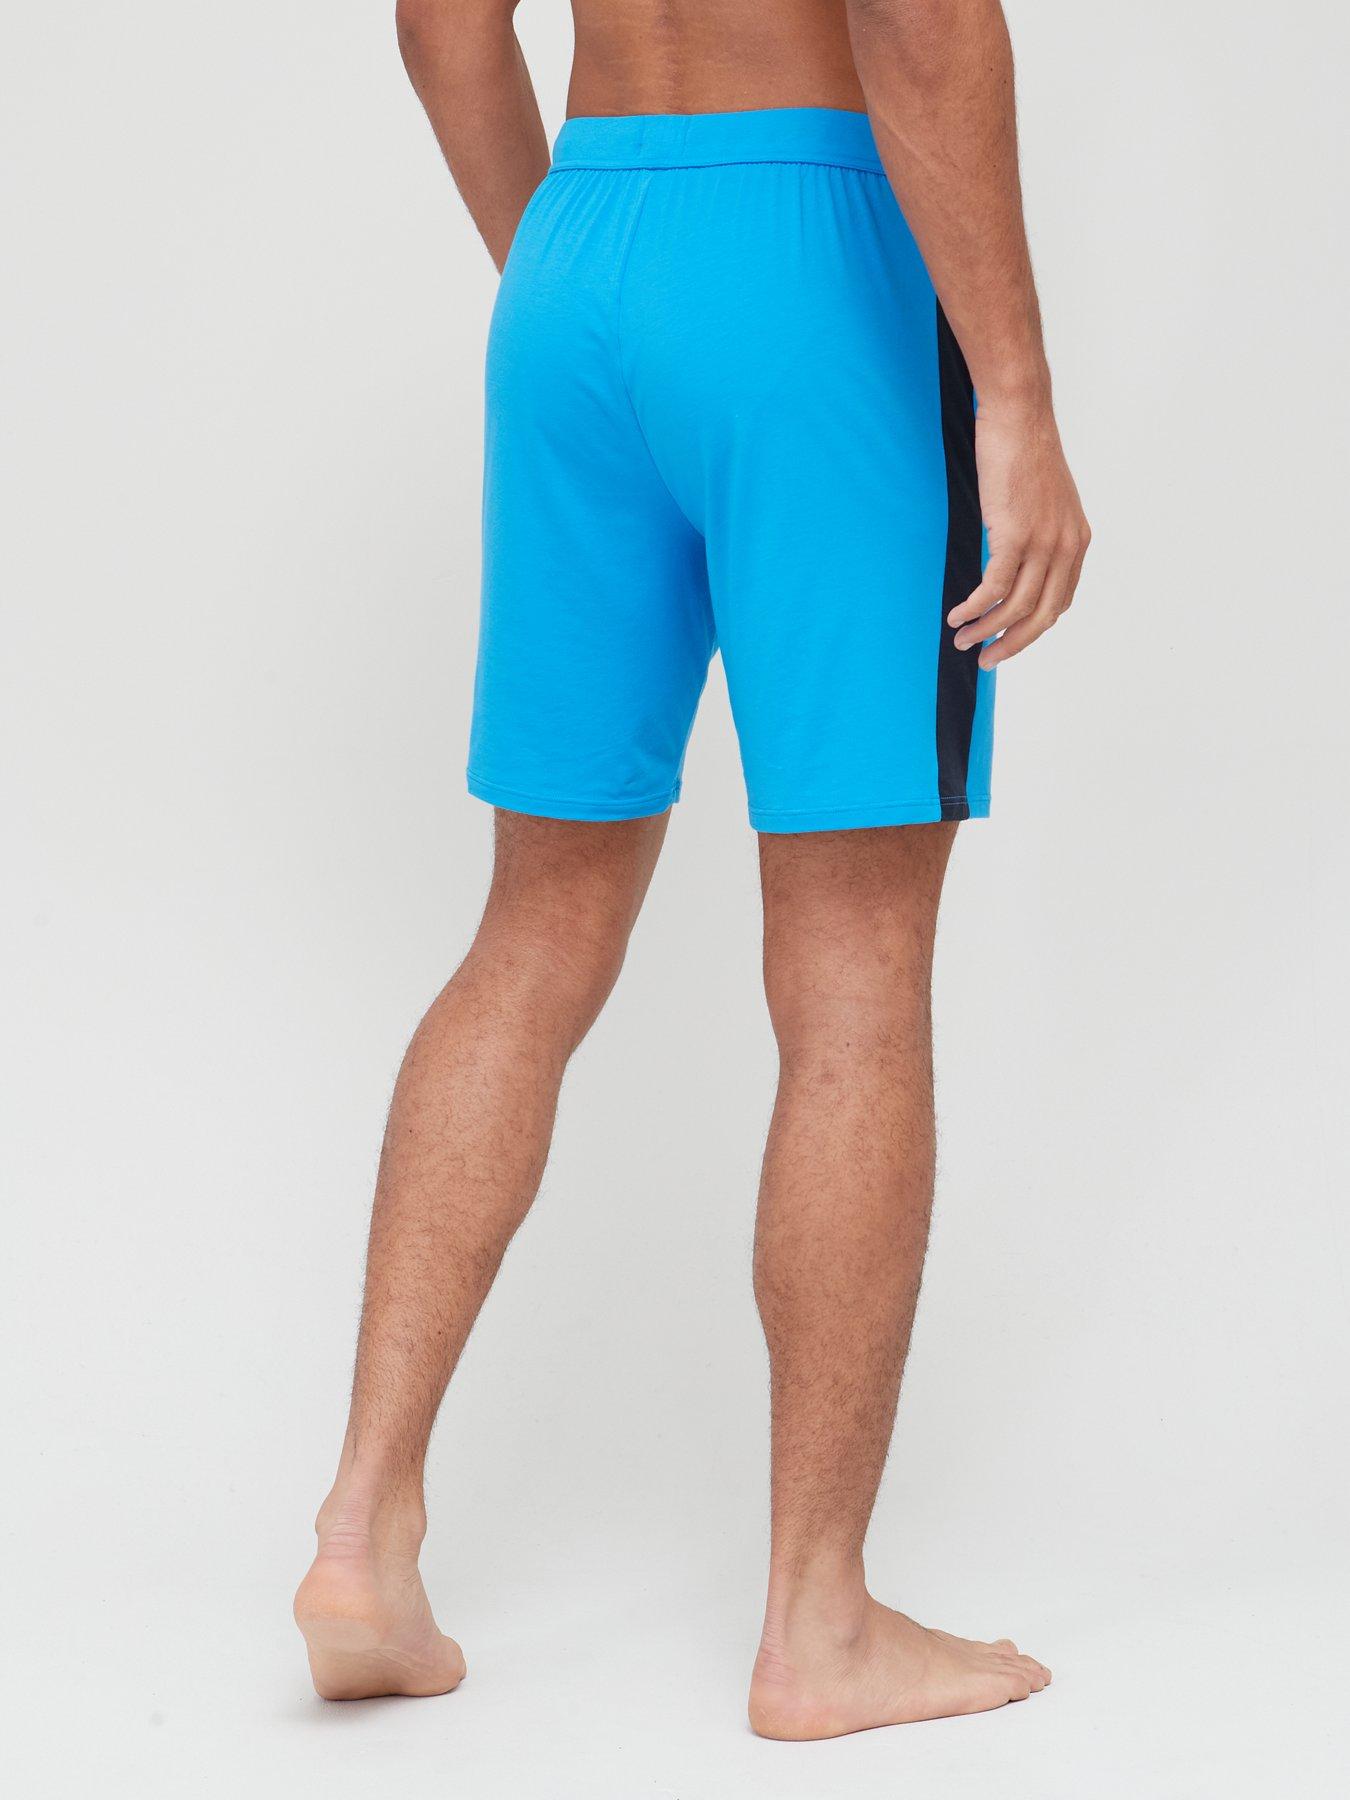  Bodywear Lounge Shorts - Blue